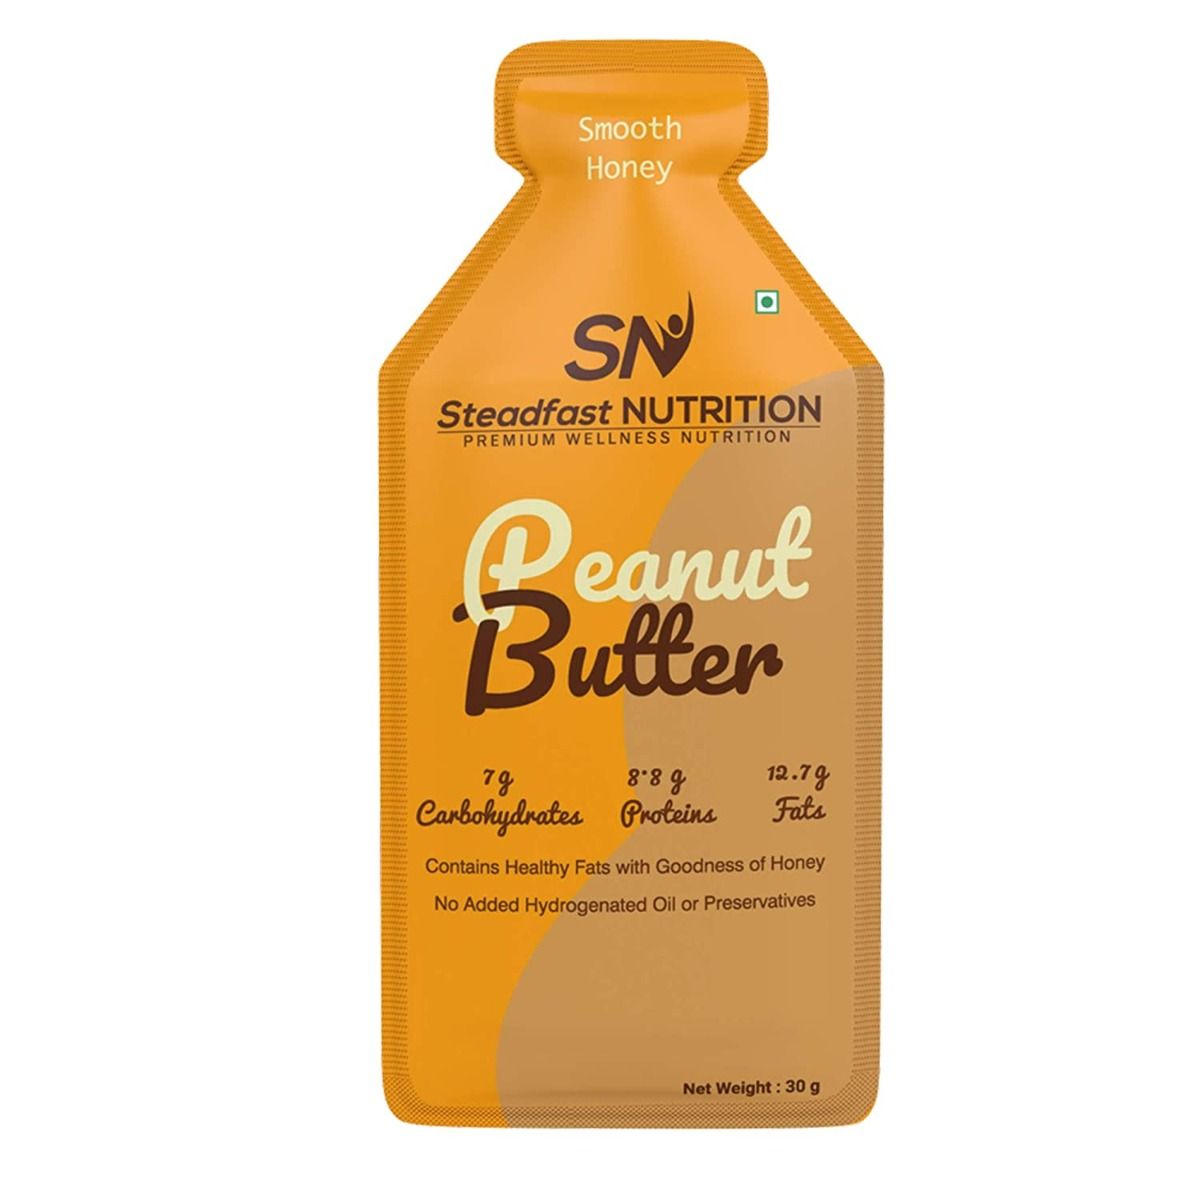 Buy Steadfast Nutrition Peanut Butter, 30 gm Online